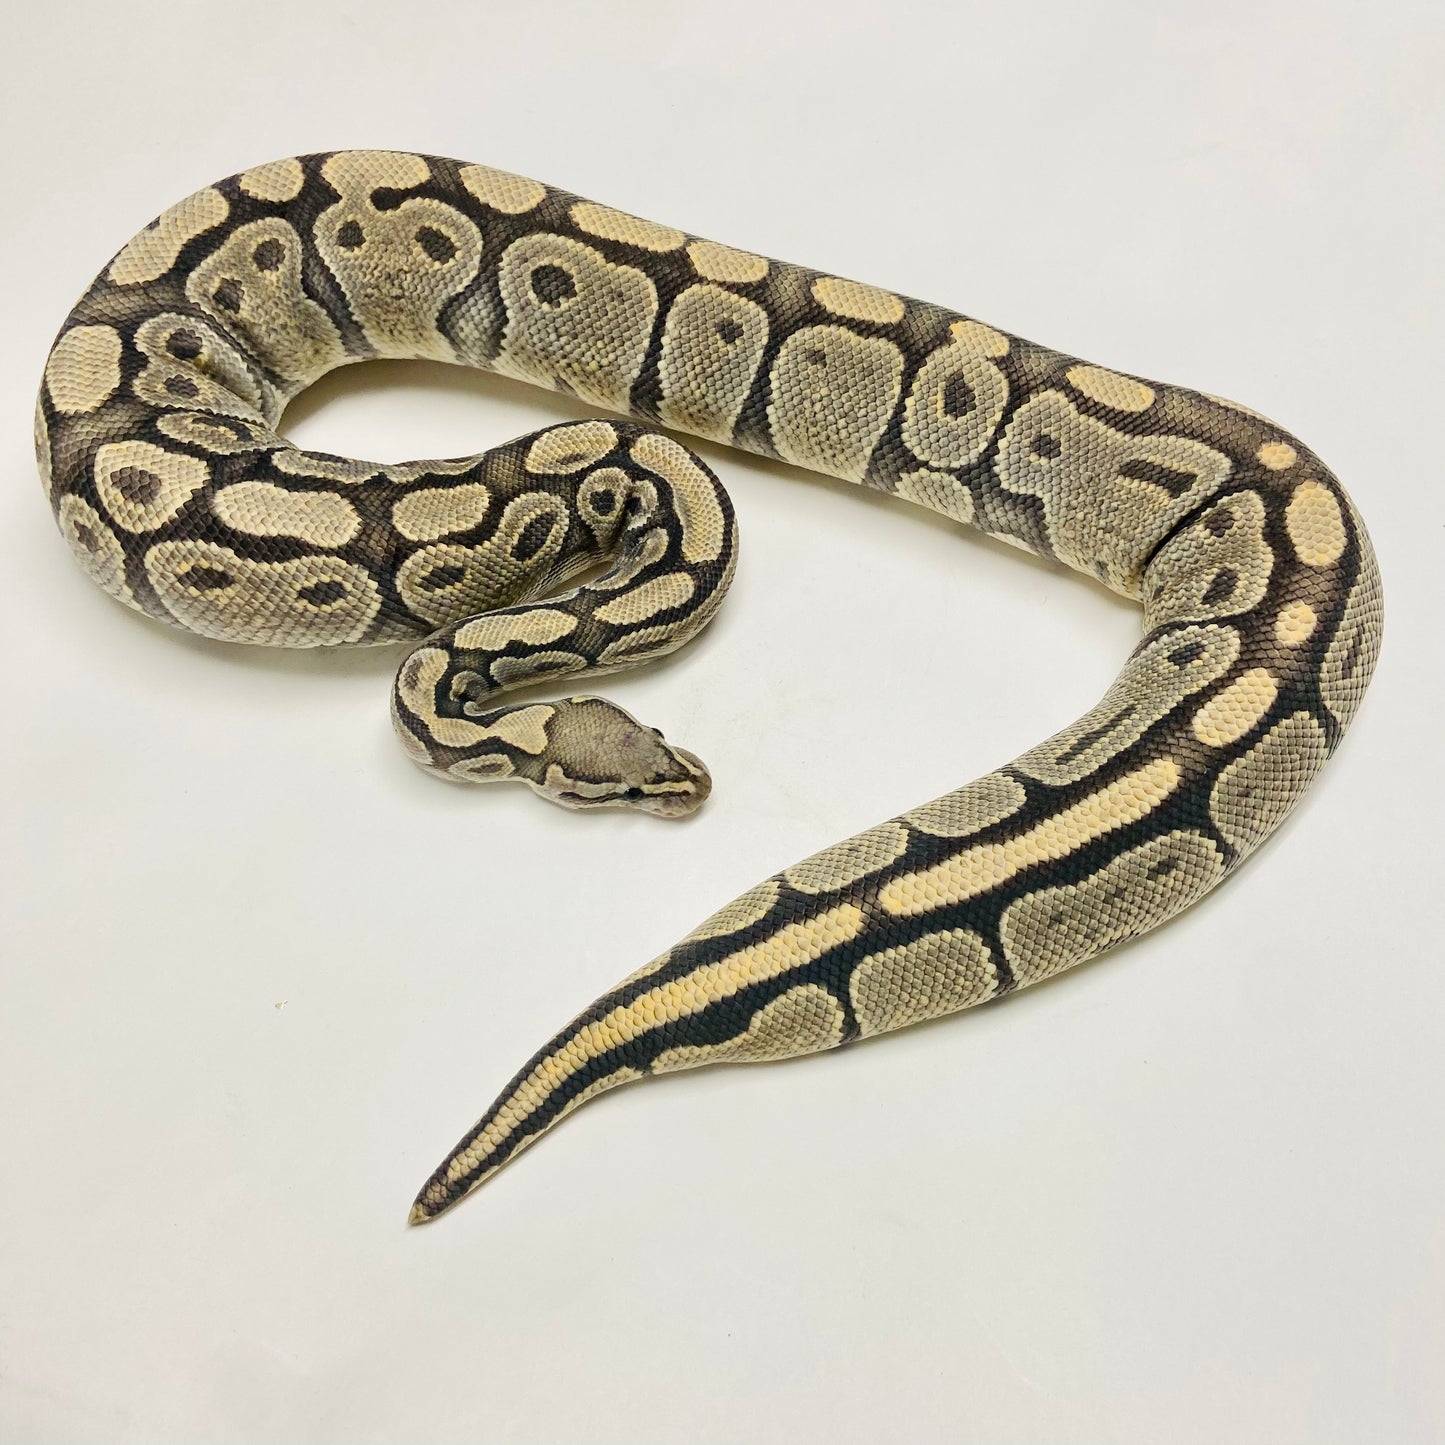 Adult Ghost Ball Python- Female